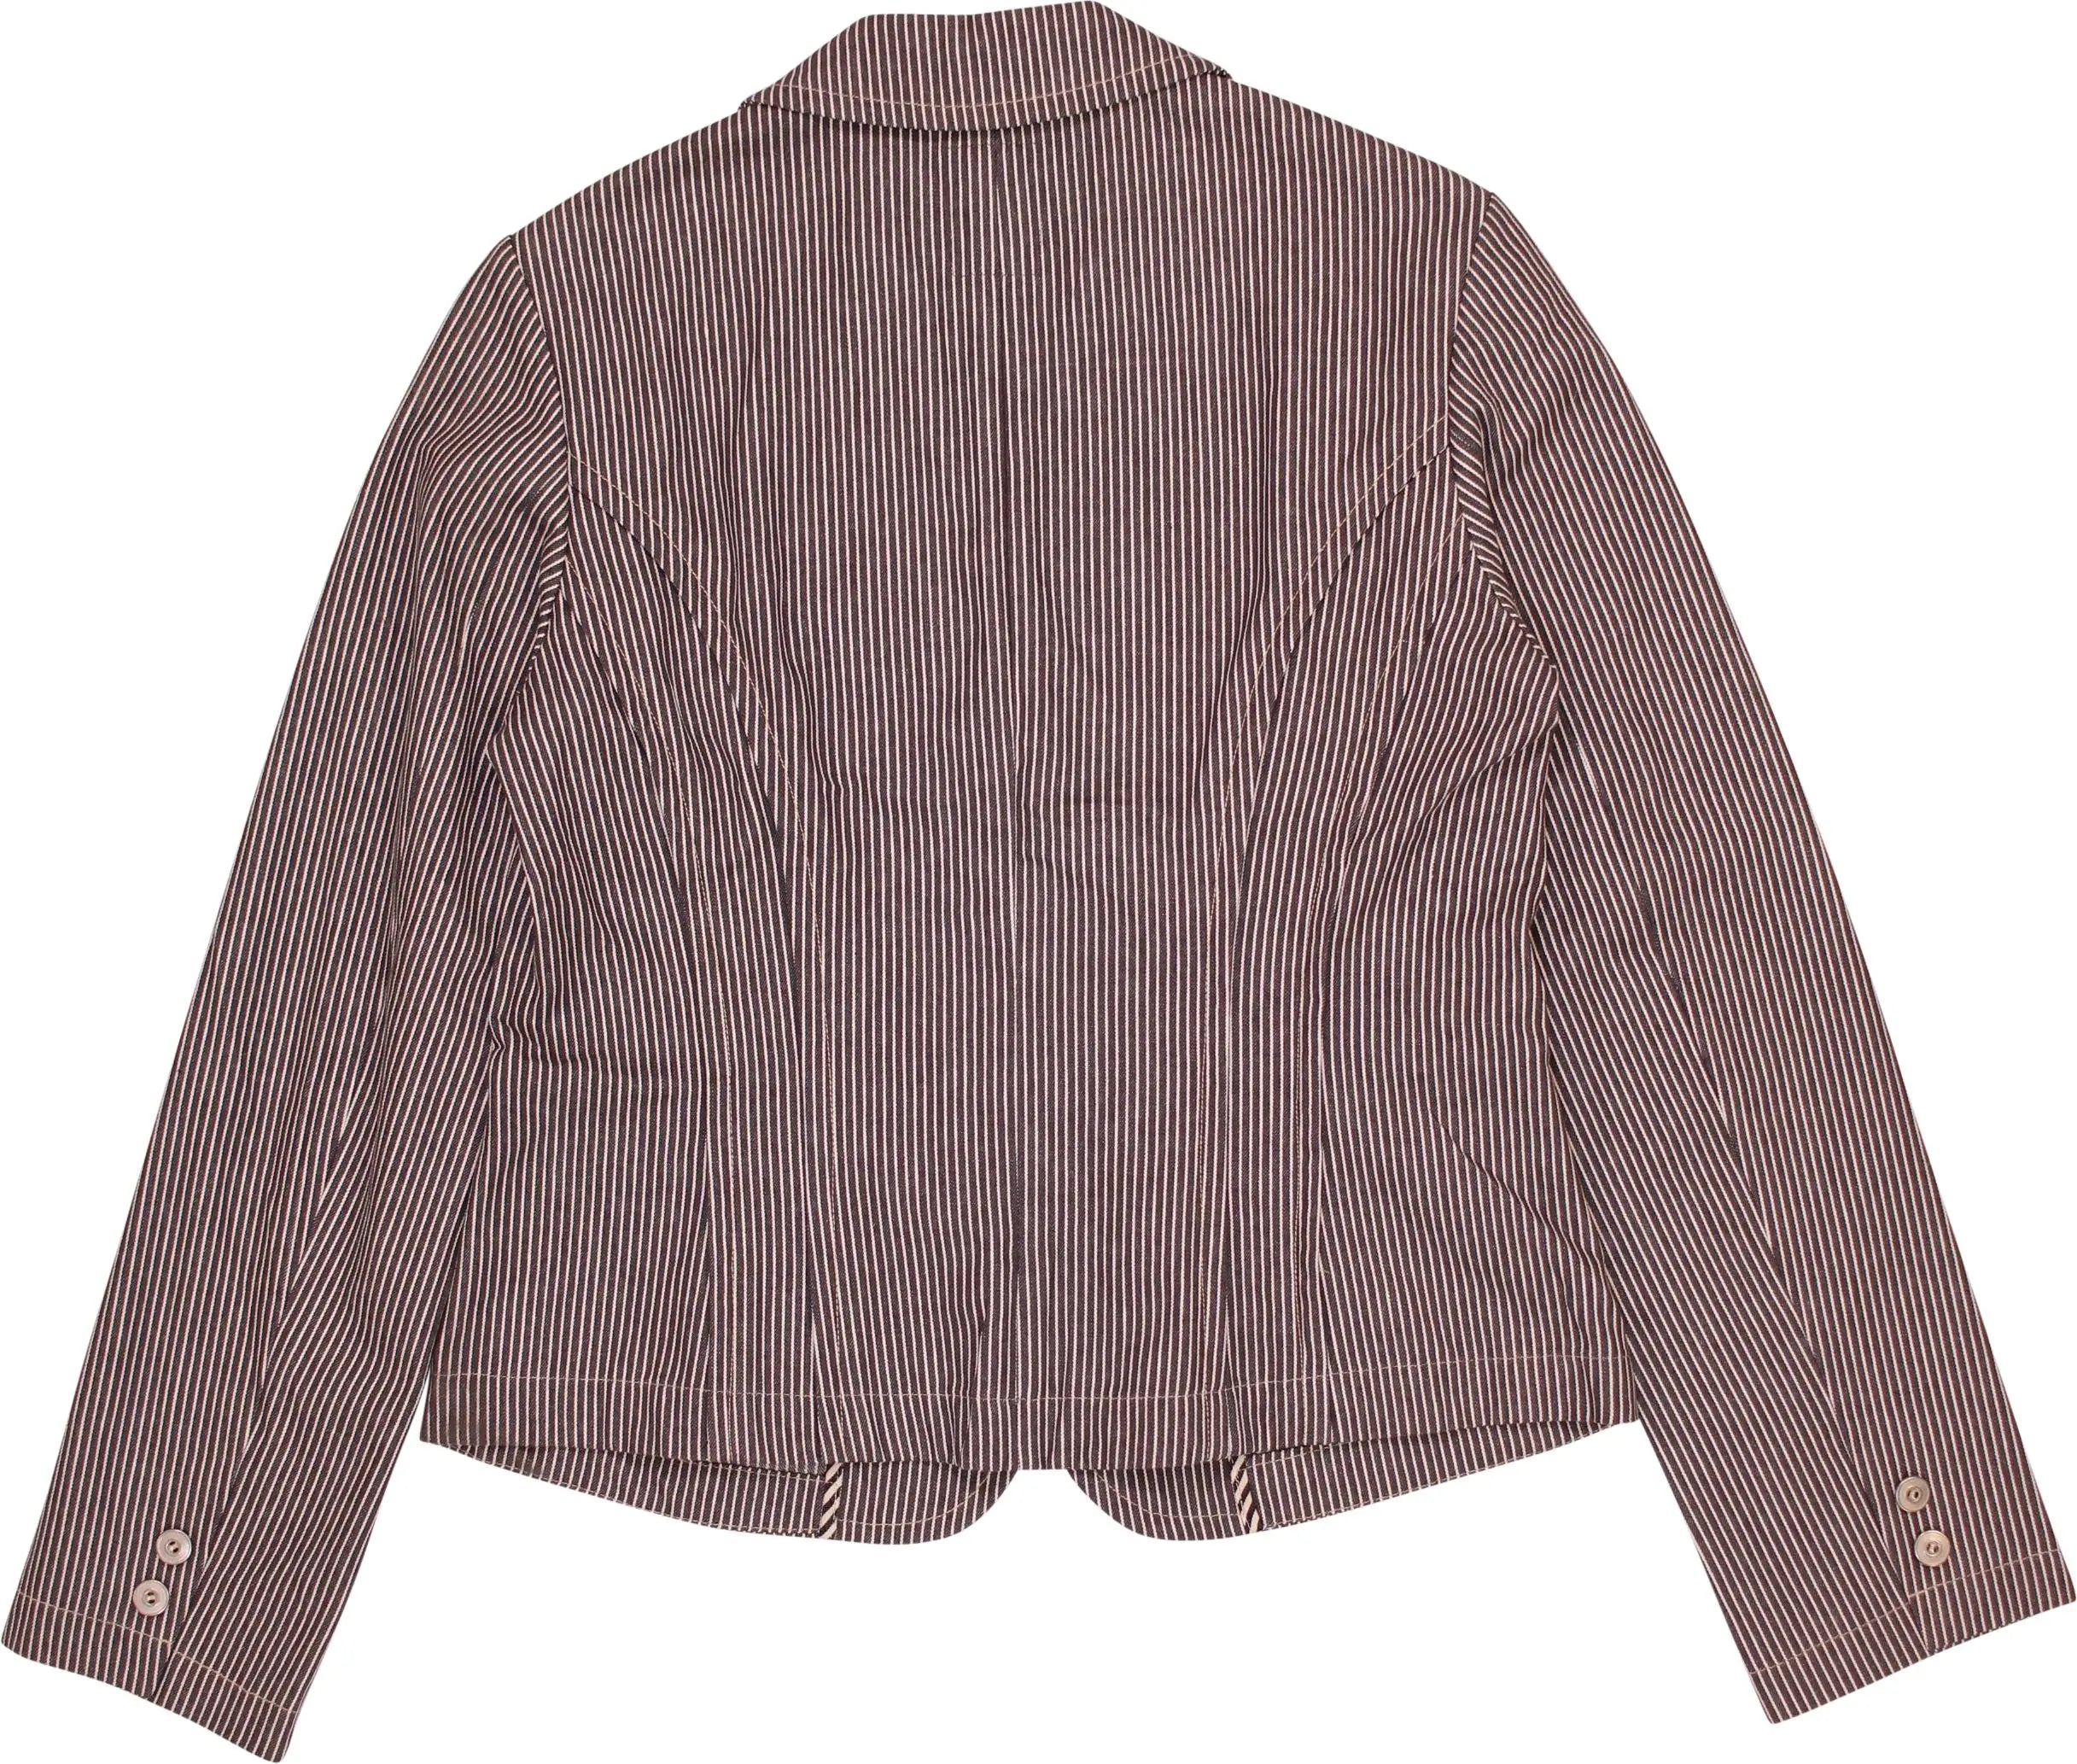 Tender - Striped Blazer Jacket- ThriftTale.com - Vintage and second handclothing